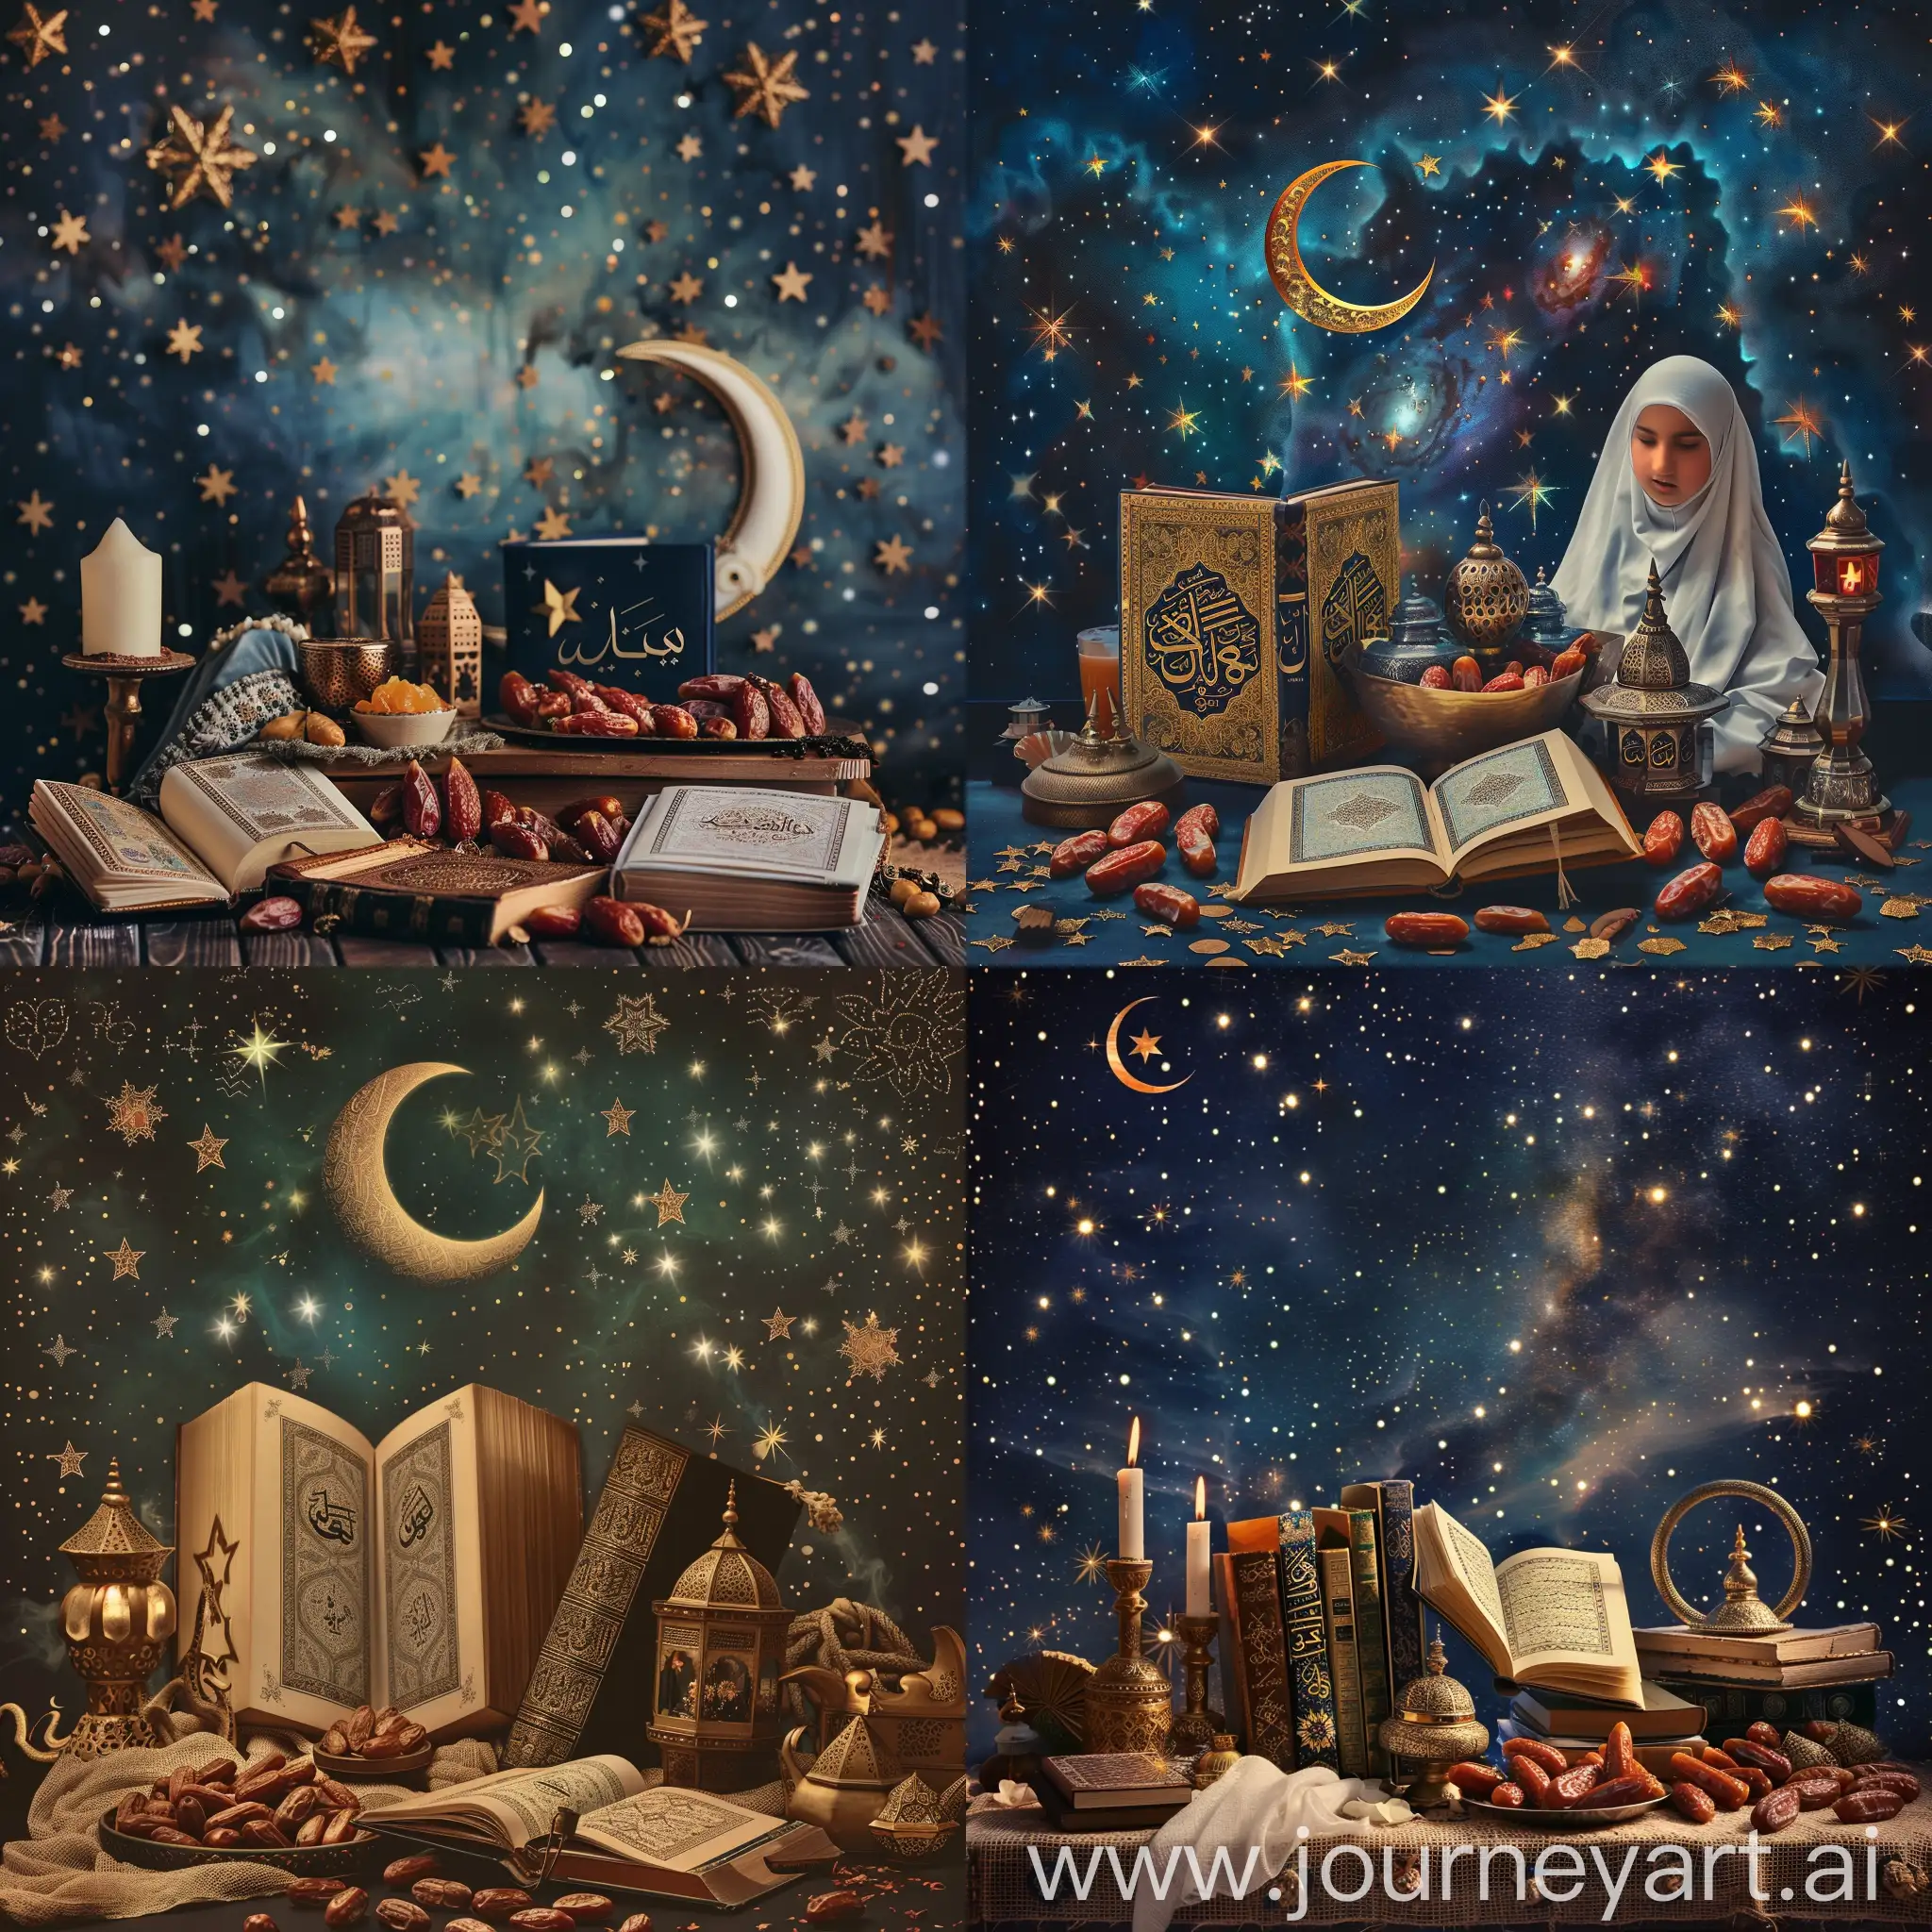 Elegant-Ramadan-Greetings-with-Crescent-Moon-Stars-and-Islamic-Symbols